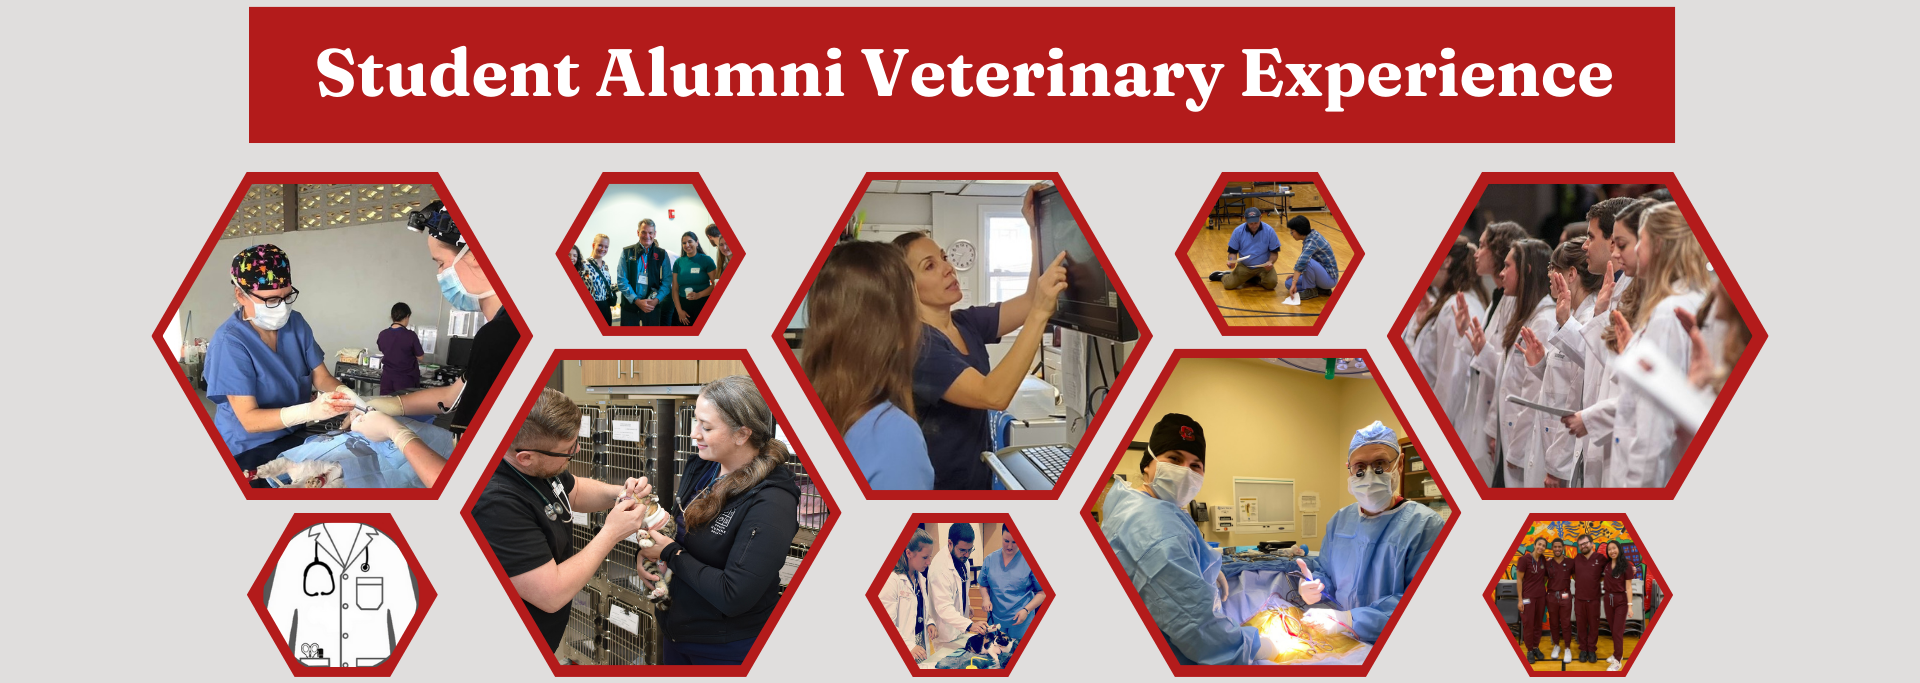 Student Alumni Veterinary Experience Banner